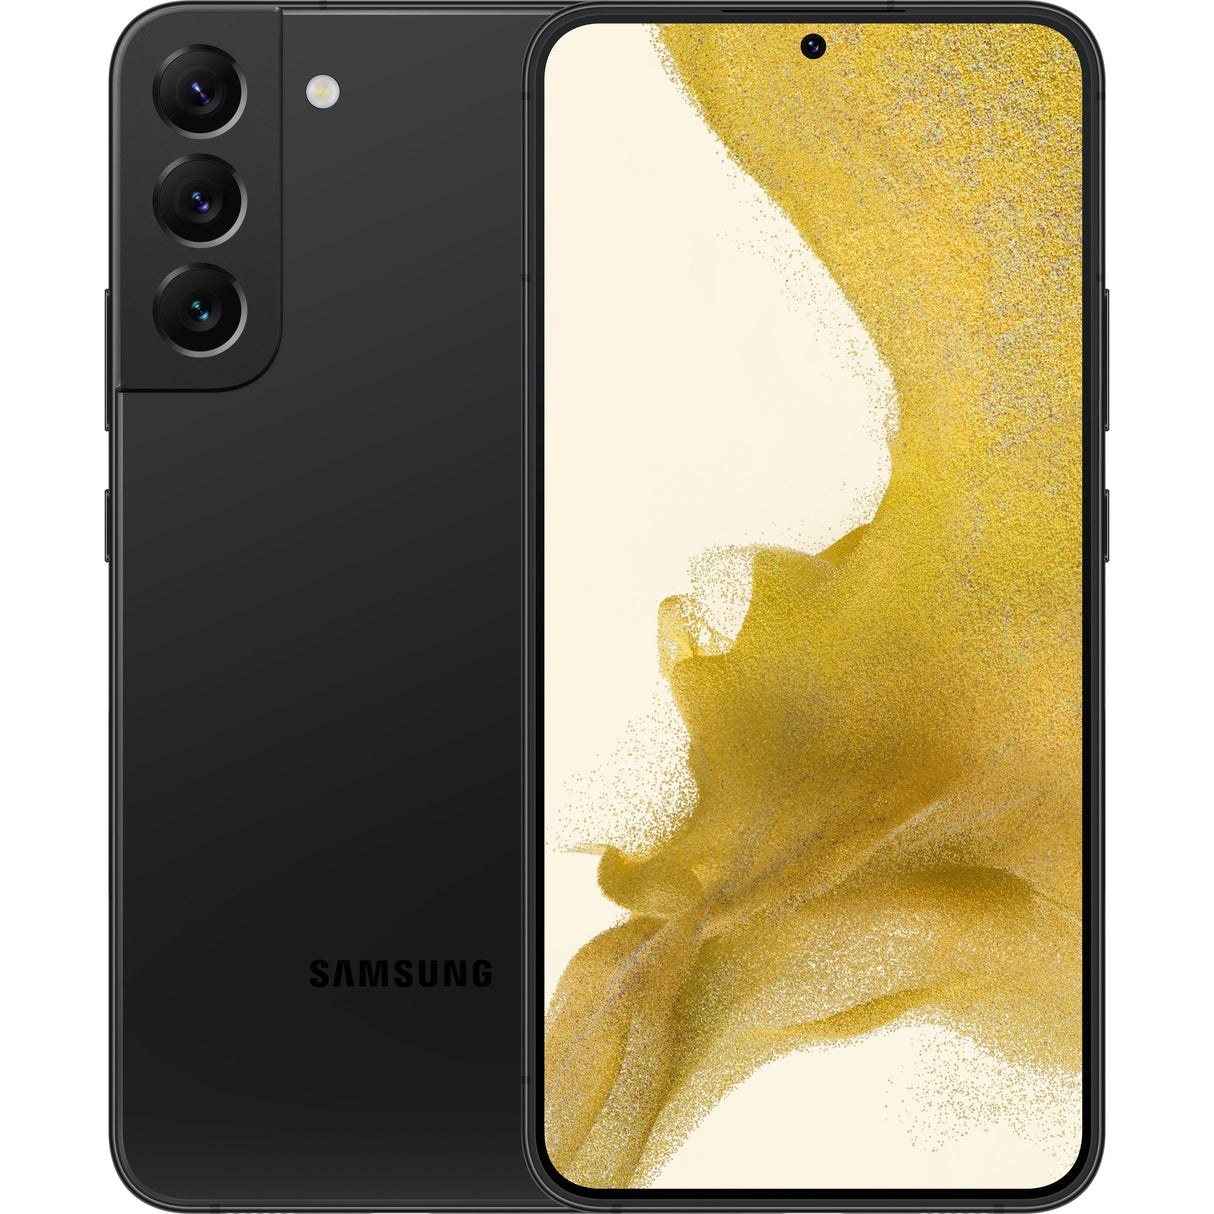 Samsung Galaxy S22 - 128GB - Phantom Black - Factory unlocked